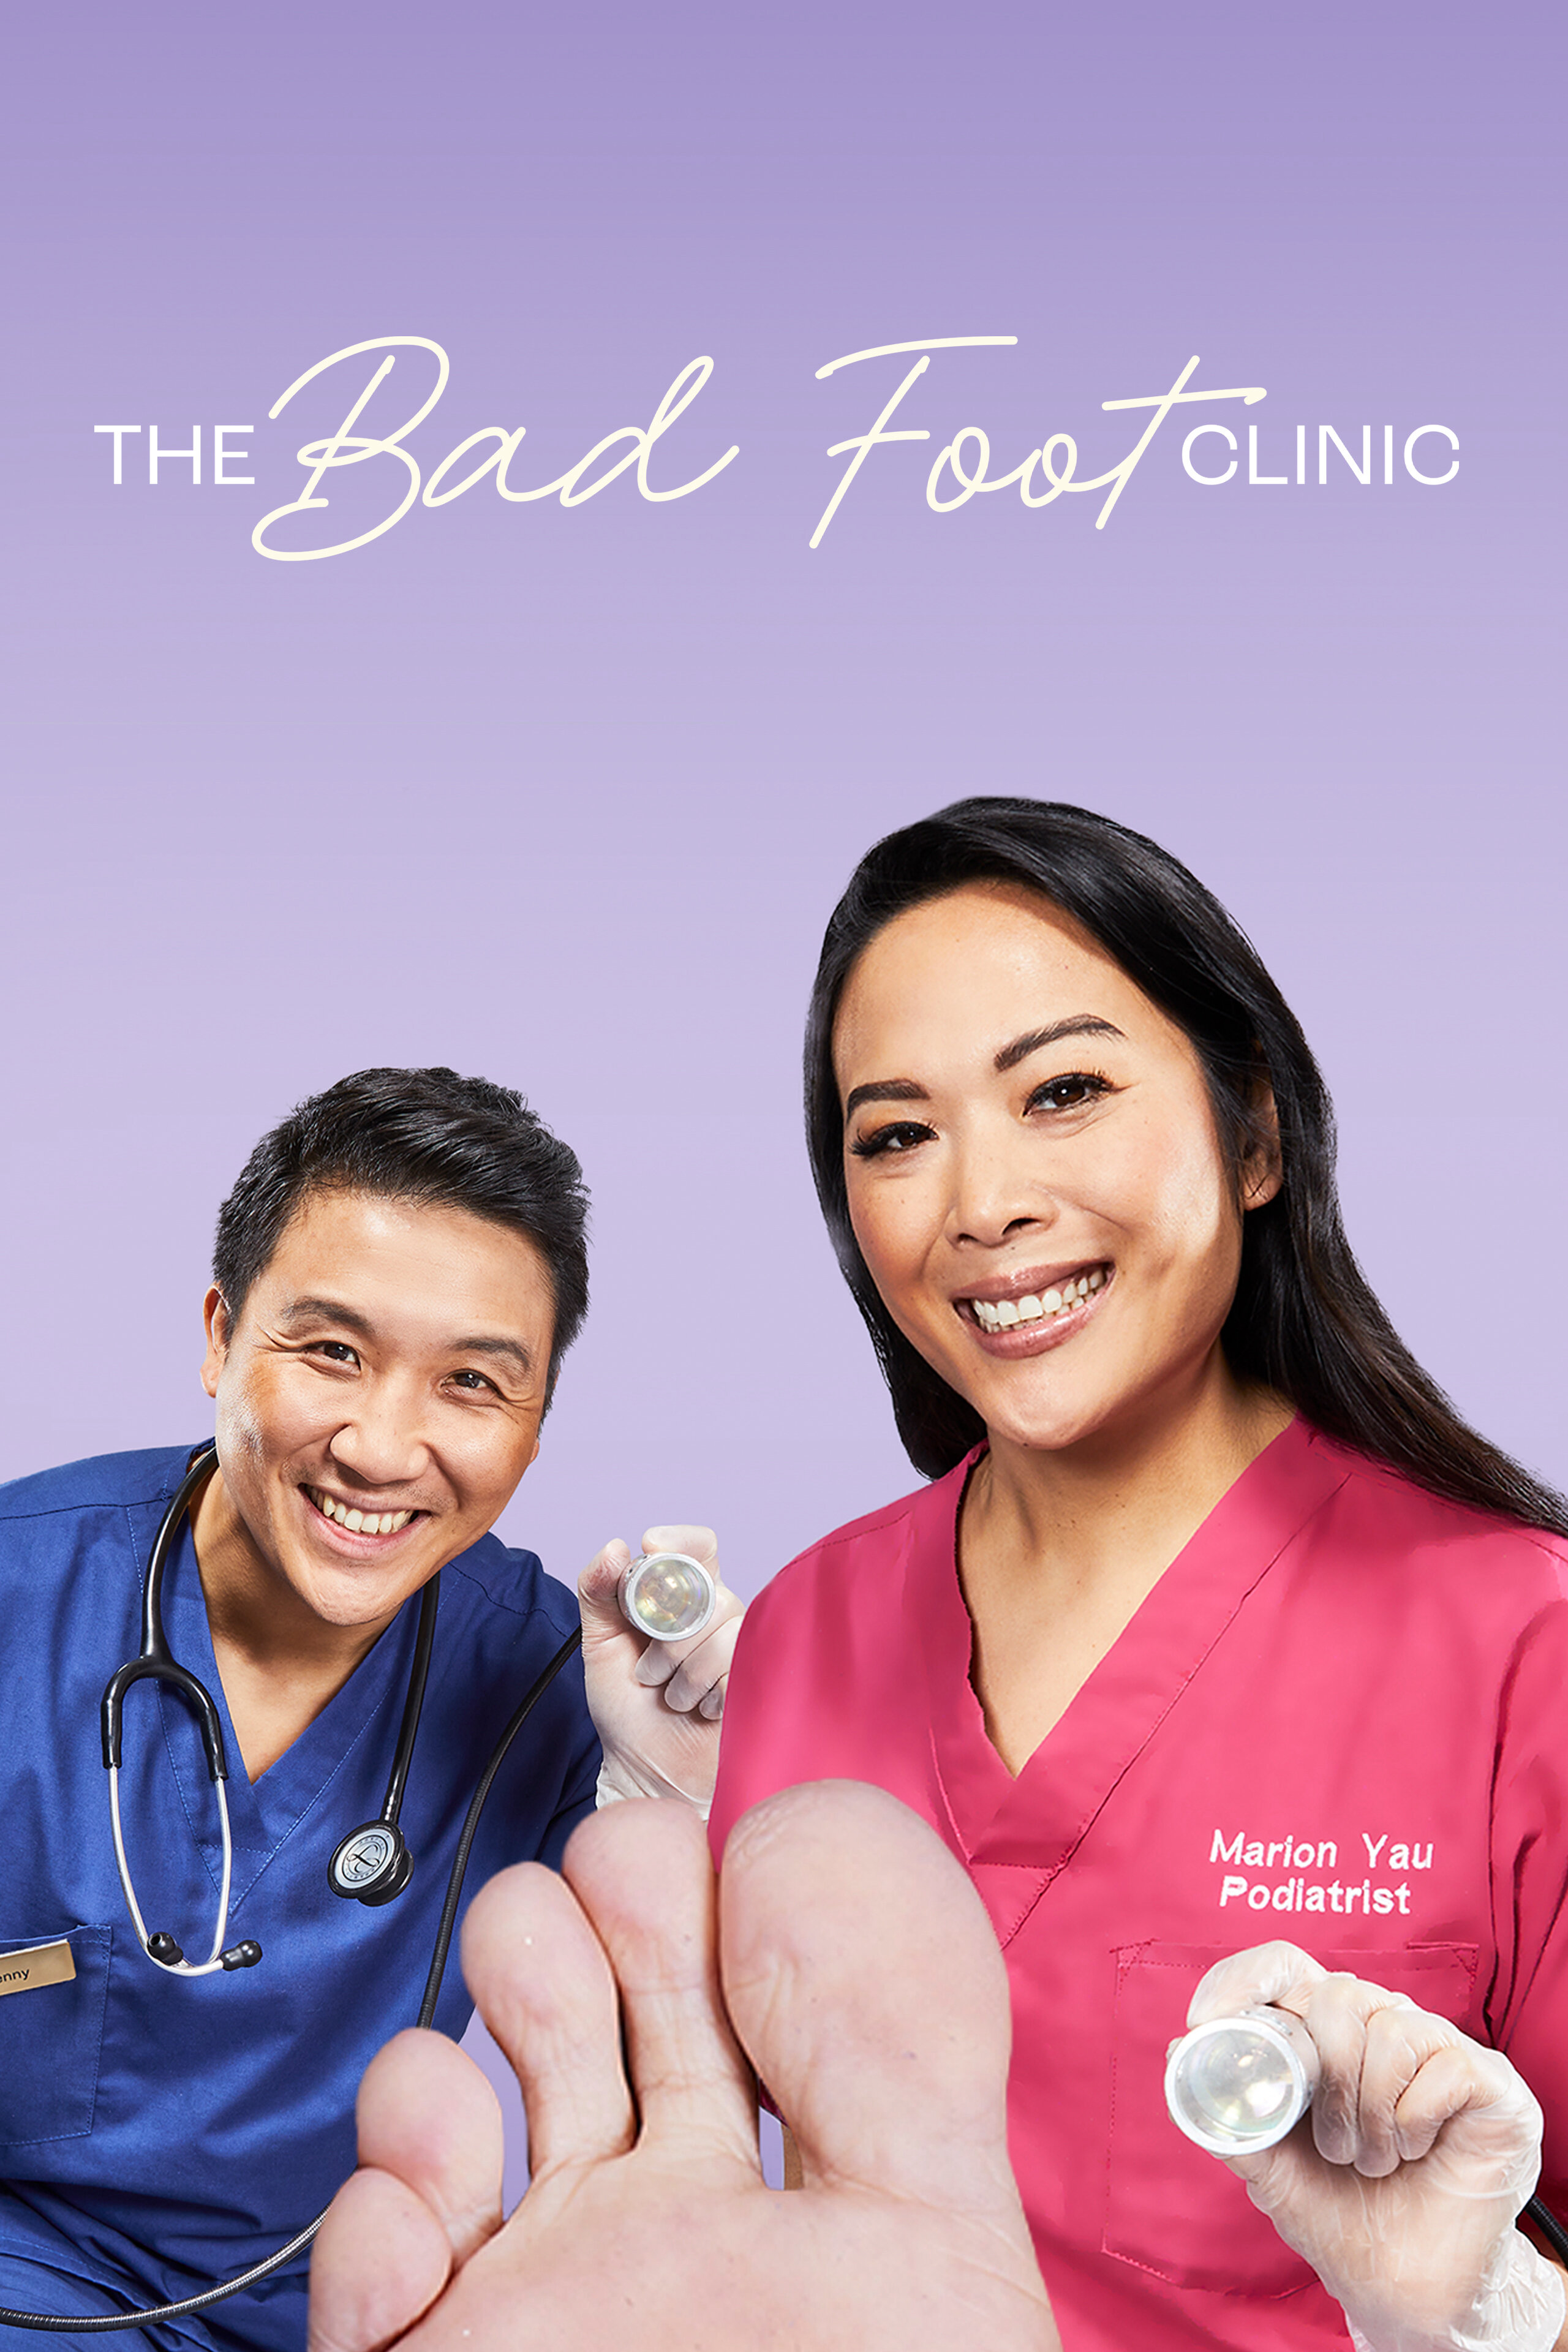 The Bad Foot Clinic ne zaman